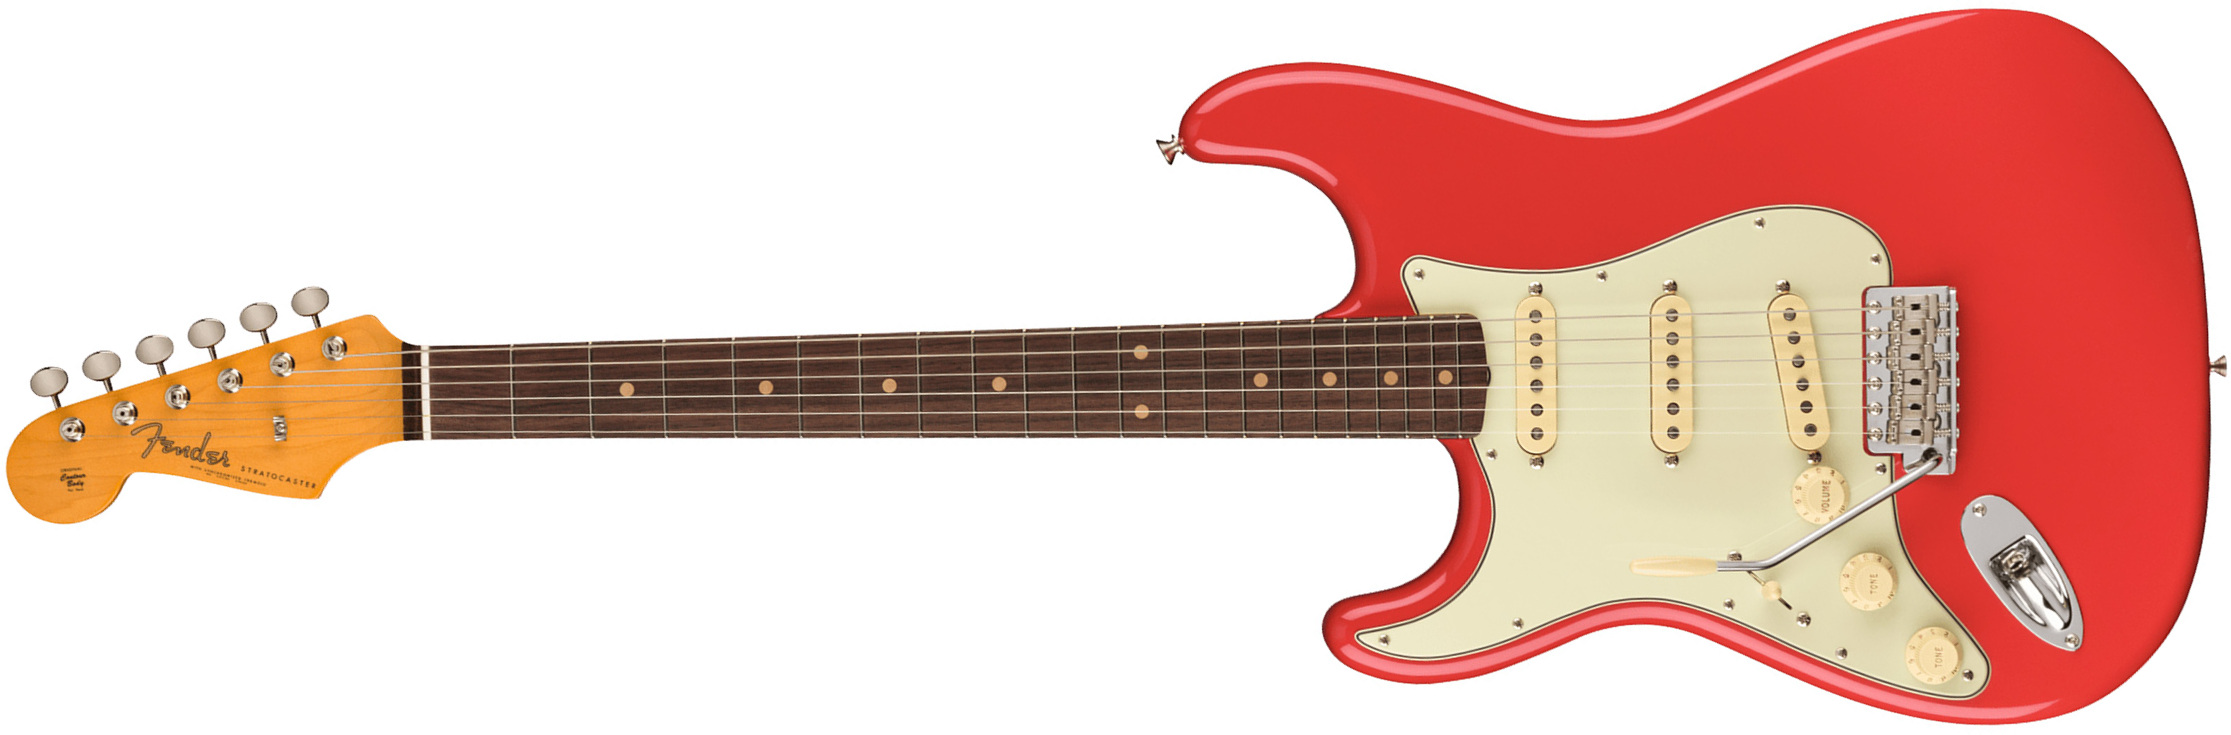 Fender Strat 1961 American Vintage Ii Lh Gaucher Usa 3s Trem Rw - Fiesta Red - Left-handed electric guitar - Main picture